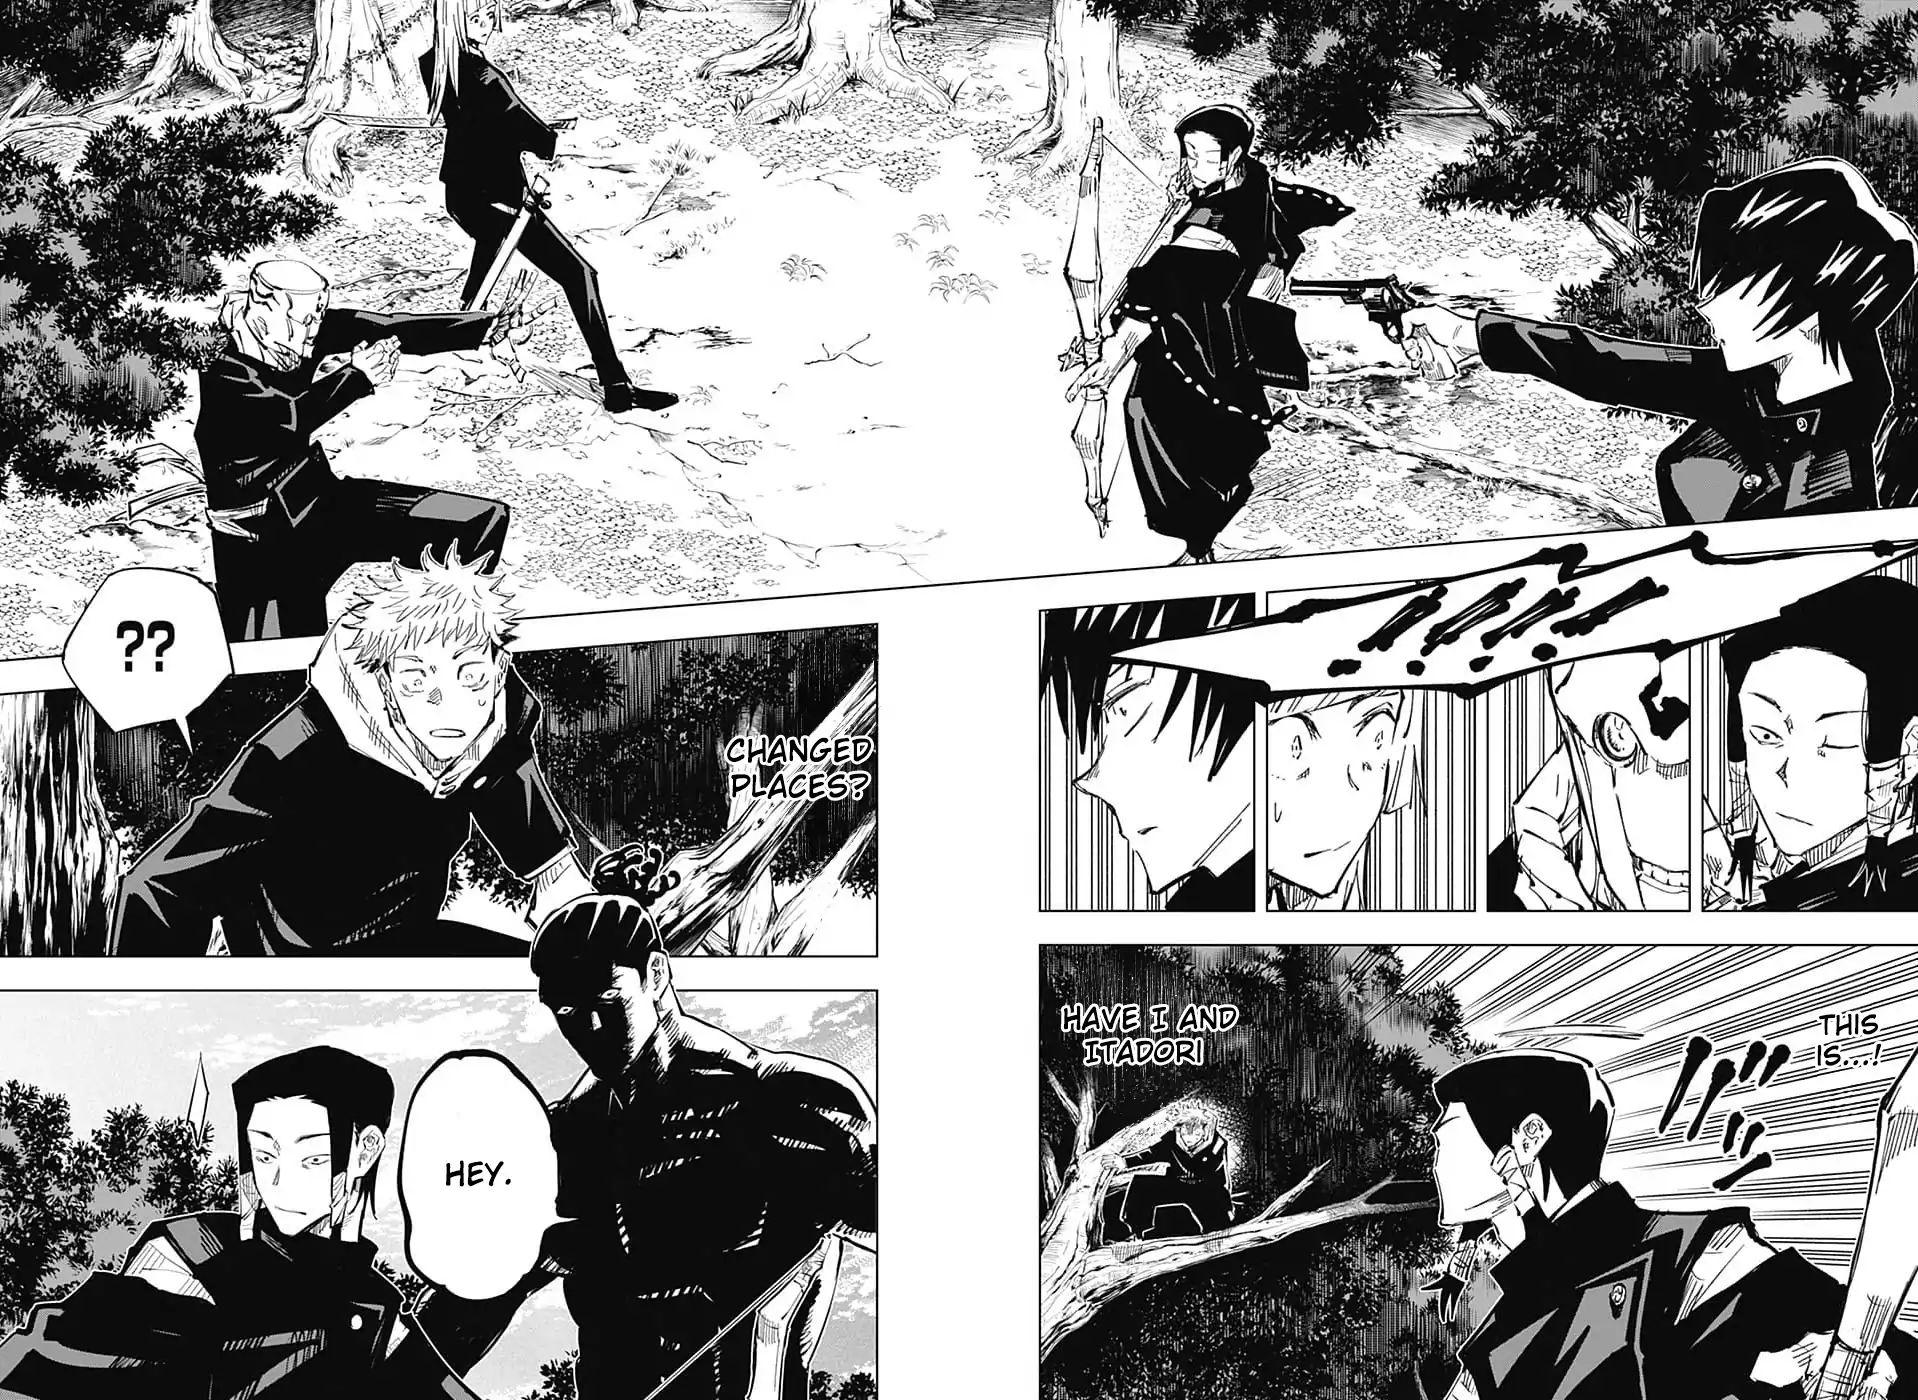 Jujutsu Kaisen Chapter 35: Exchange Festival With The Kyoto School - Team Battle 2 page 12 - Mangakakalot